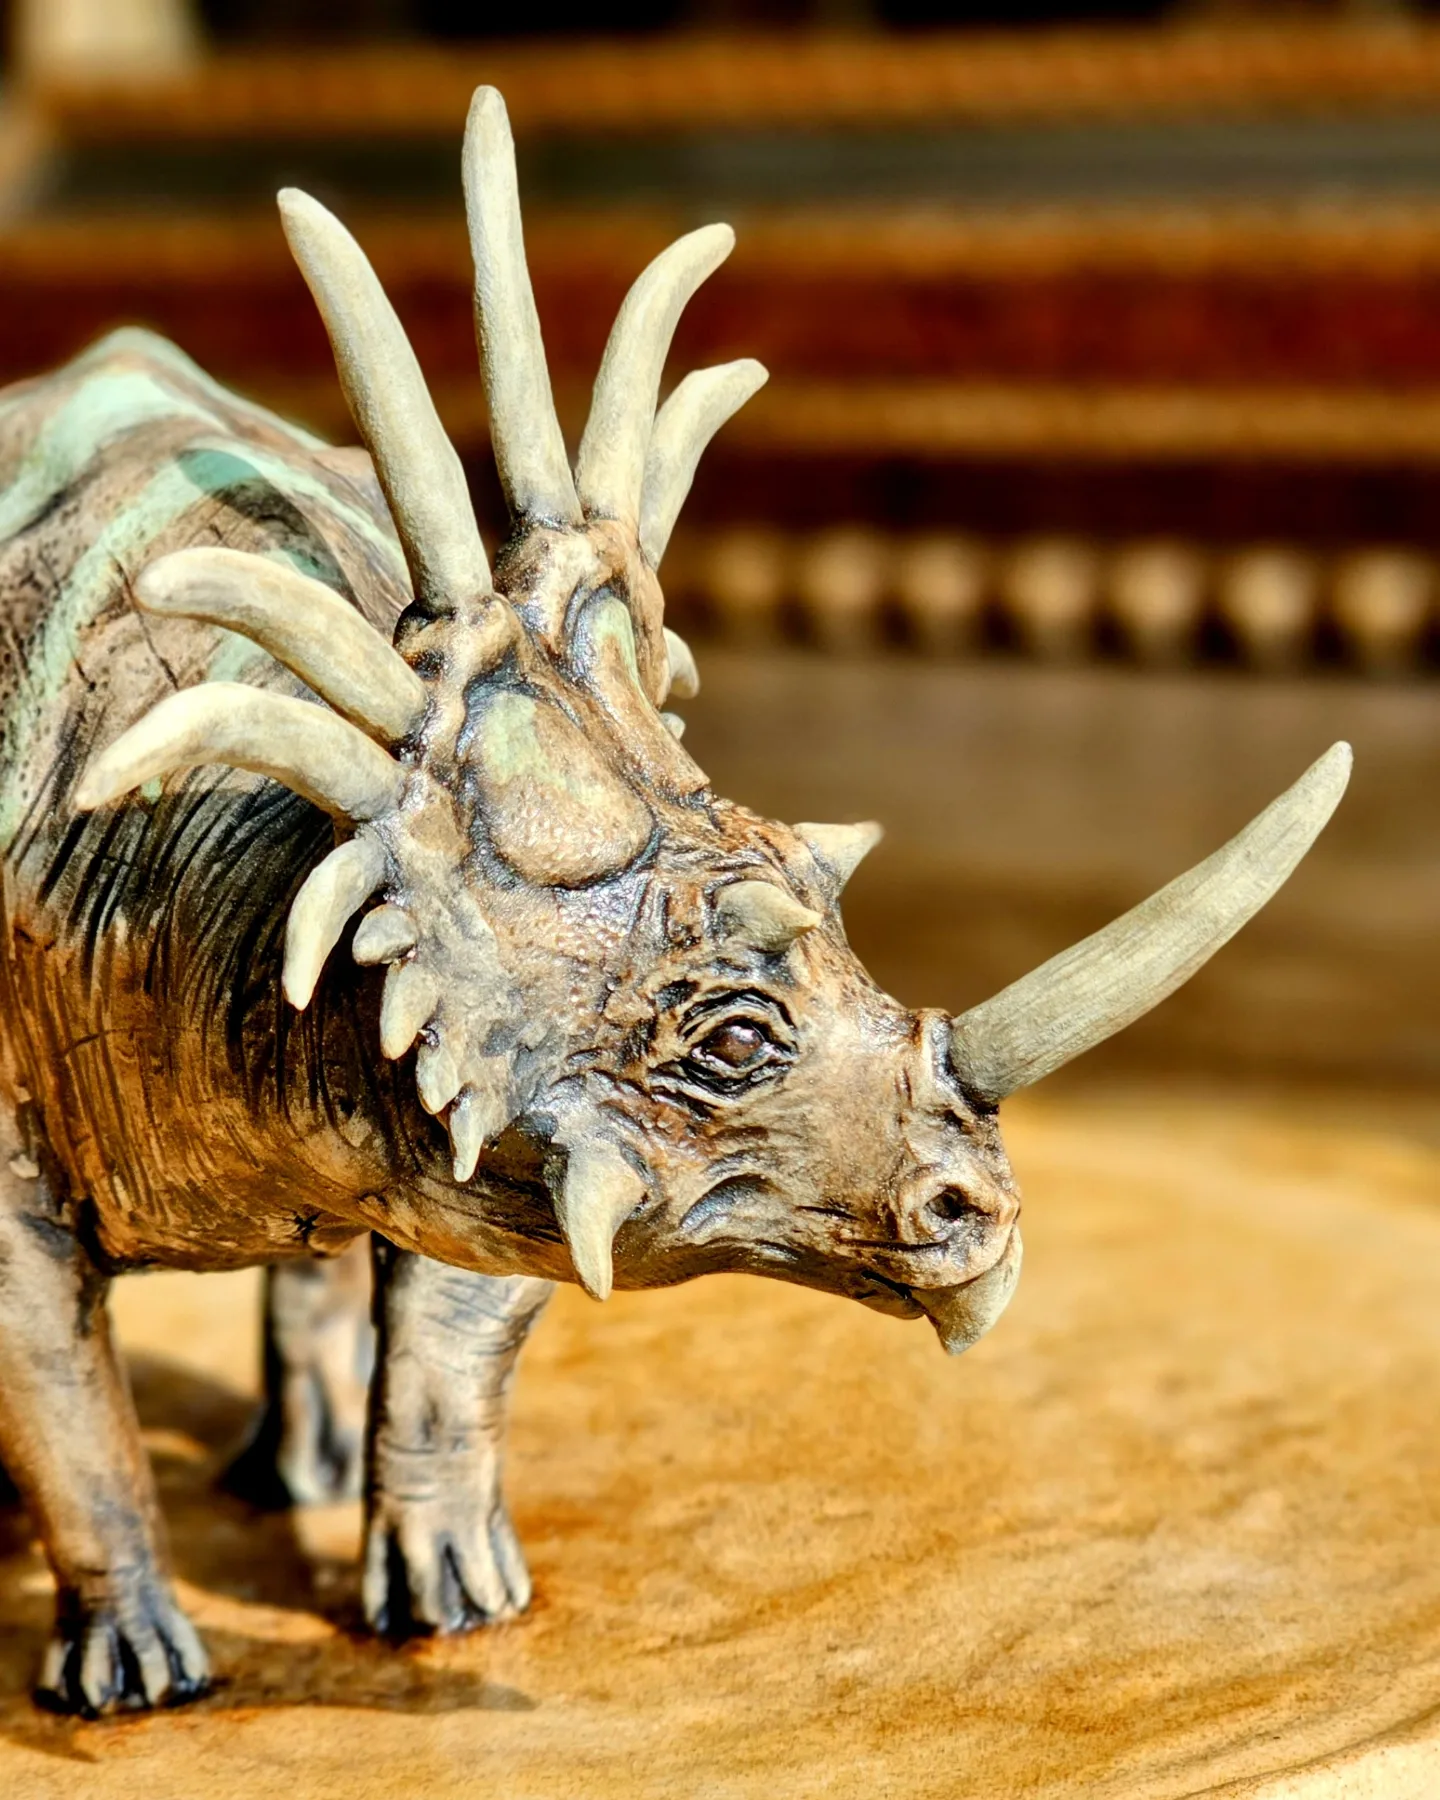 Styracosaurus